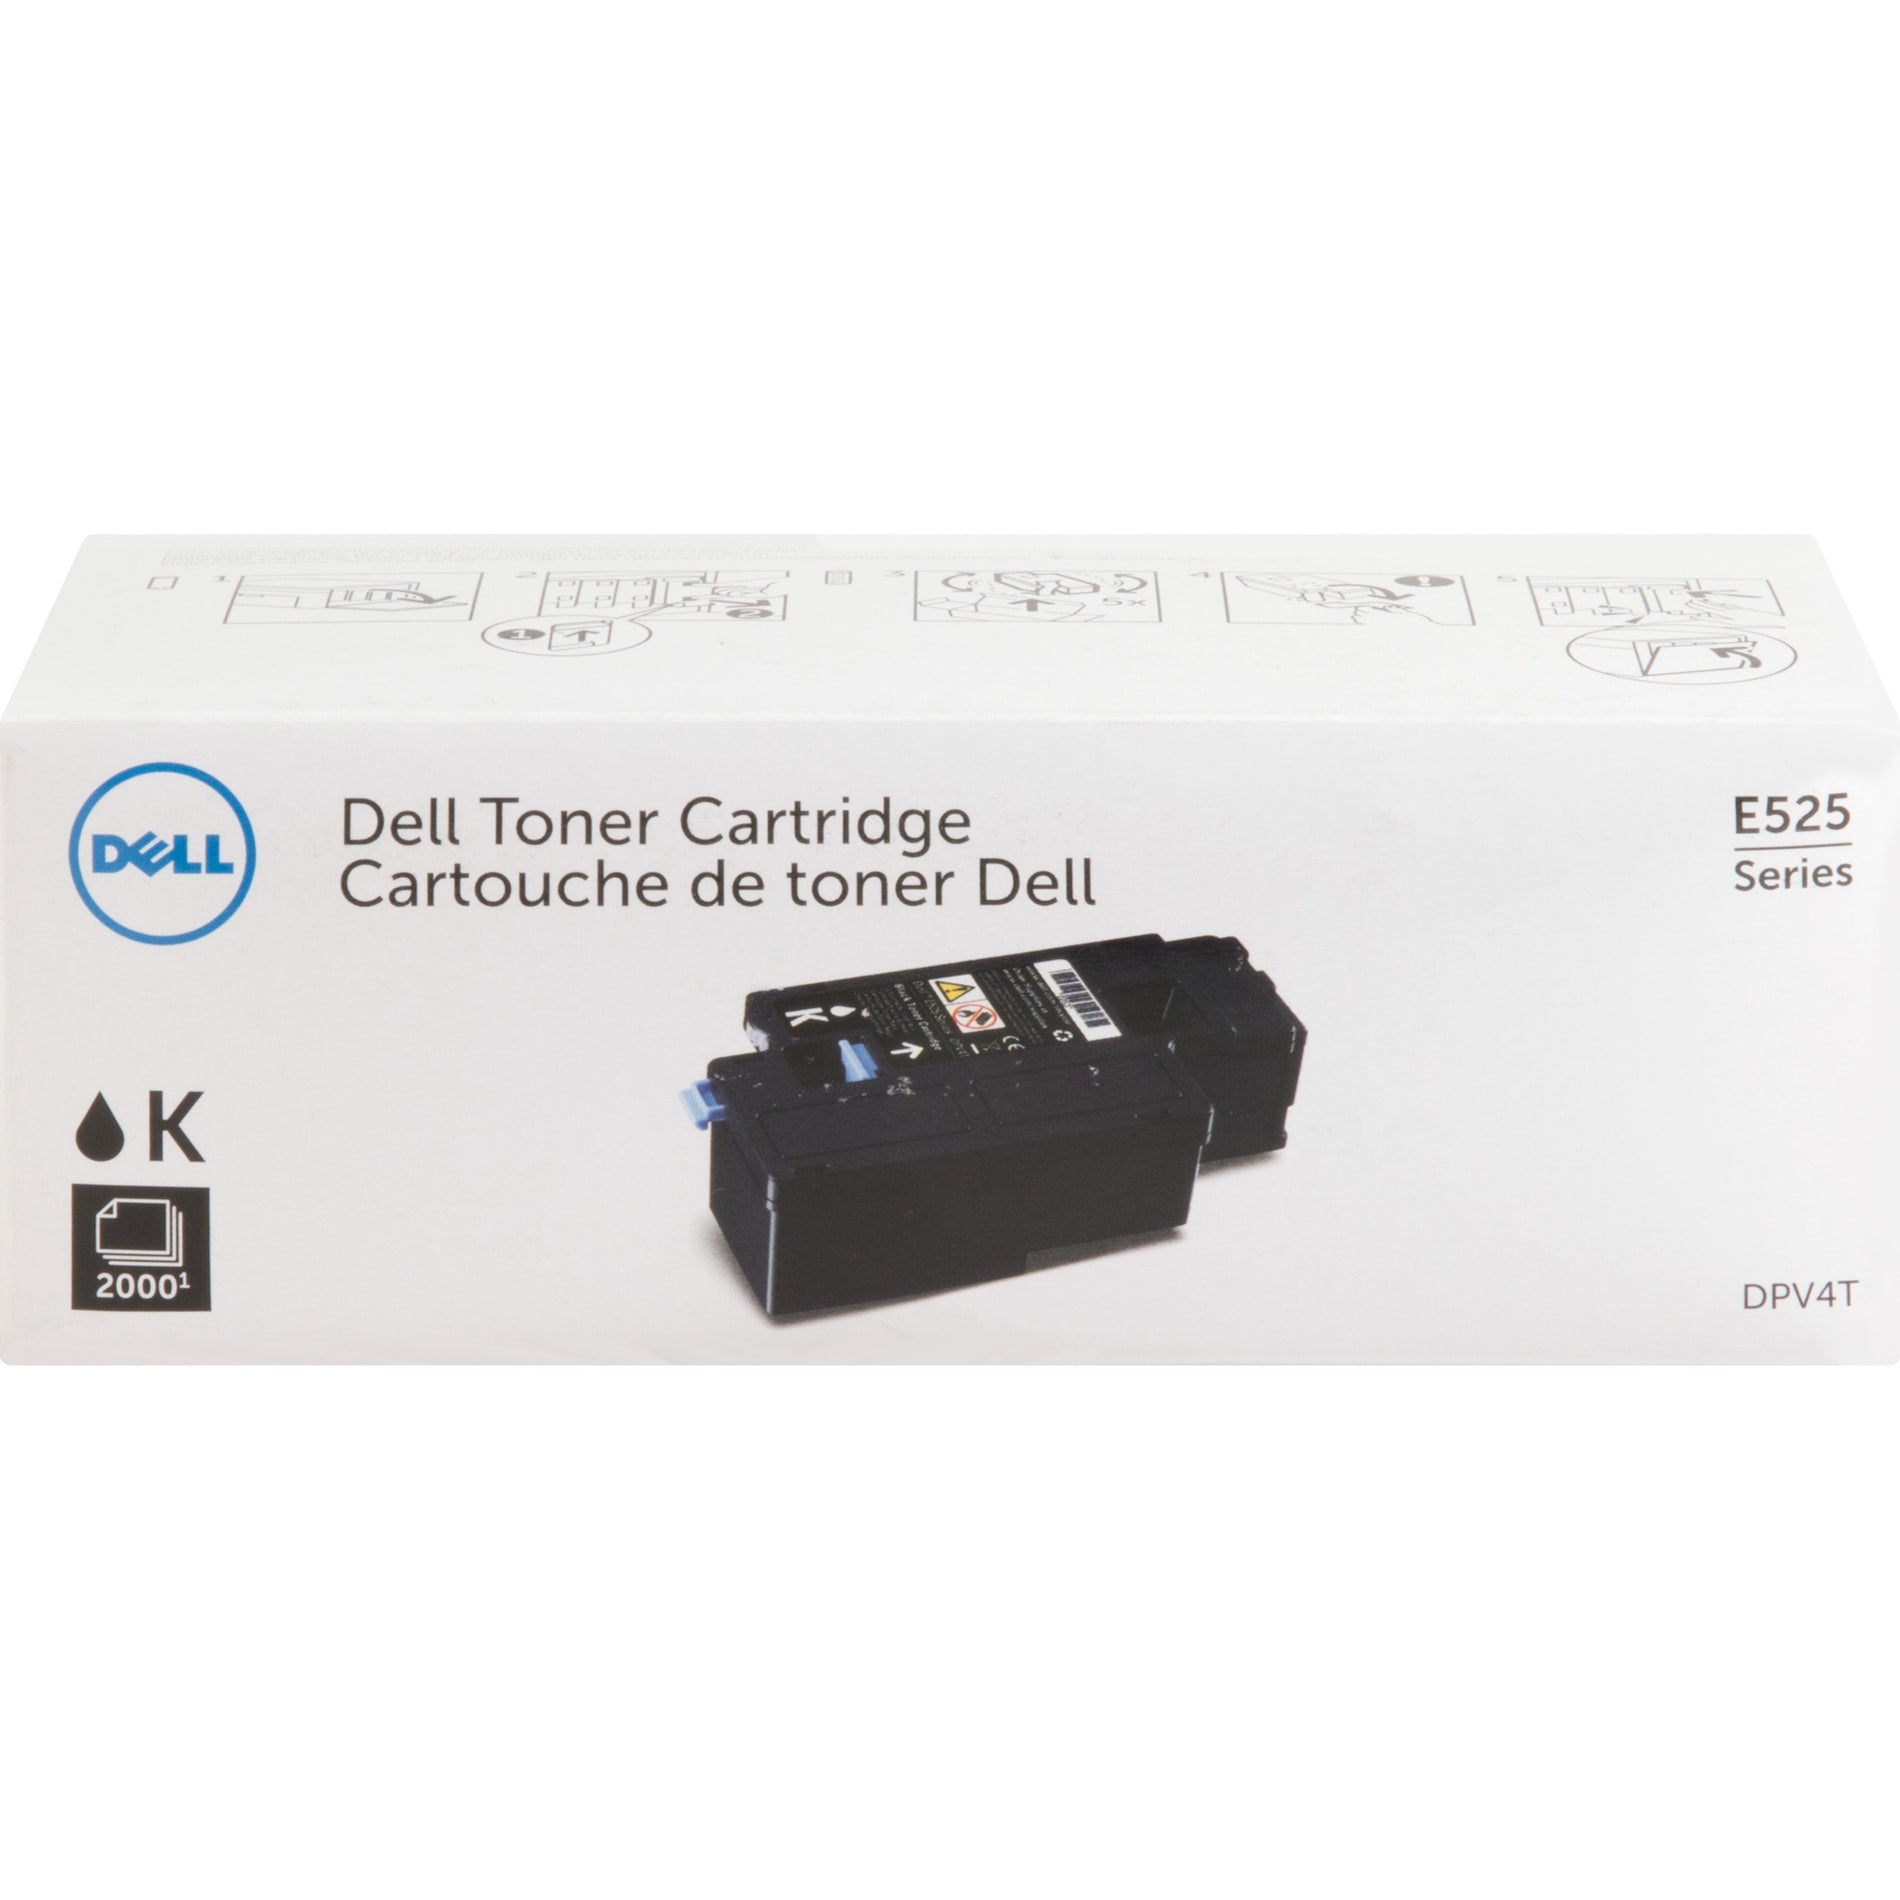 Dell DPV4T E525 Toner Cartridge, 2,000 Page Standard Yield, Black